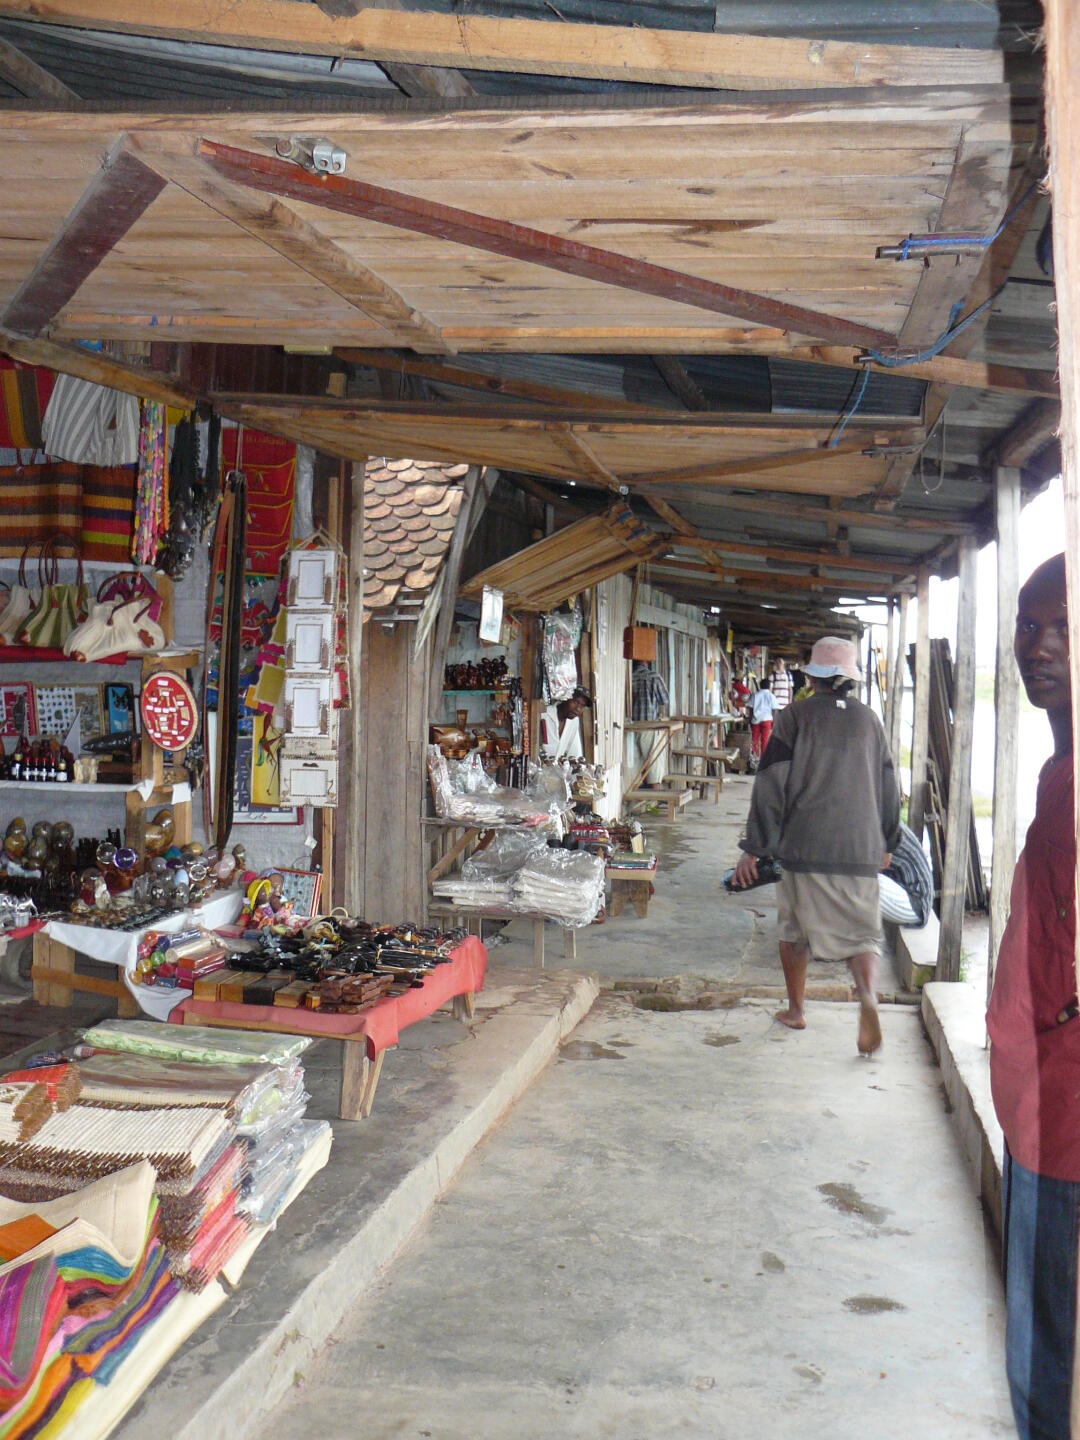 Auf dem Souvenirmarkt in Antananrivo.